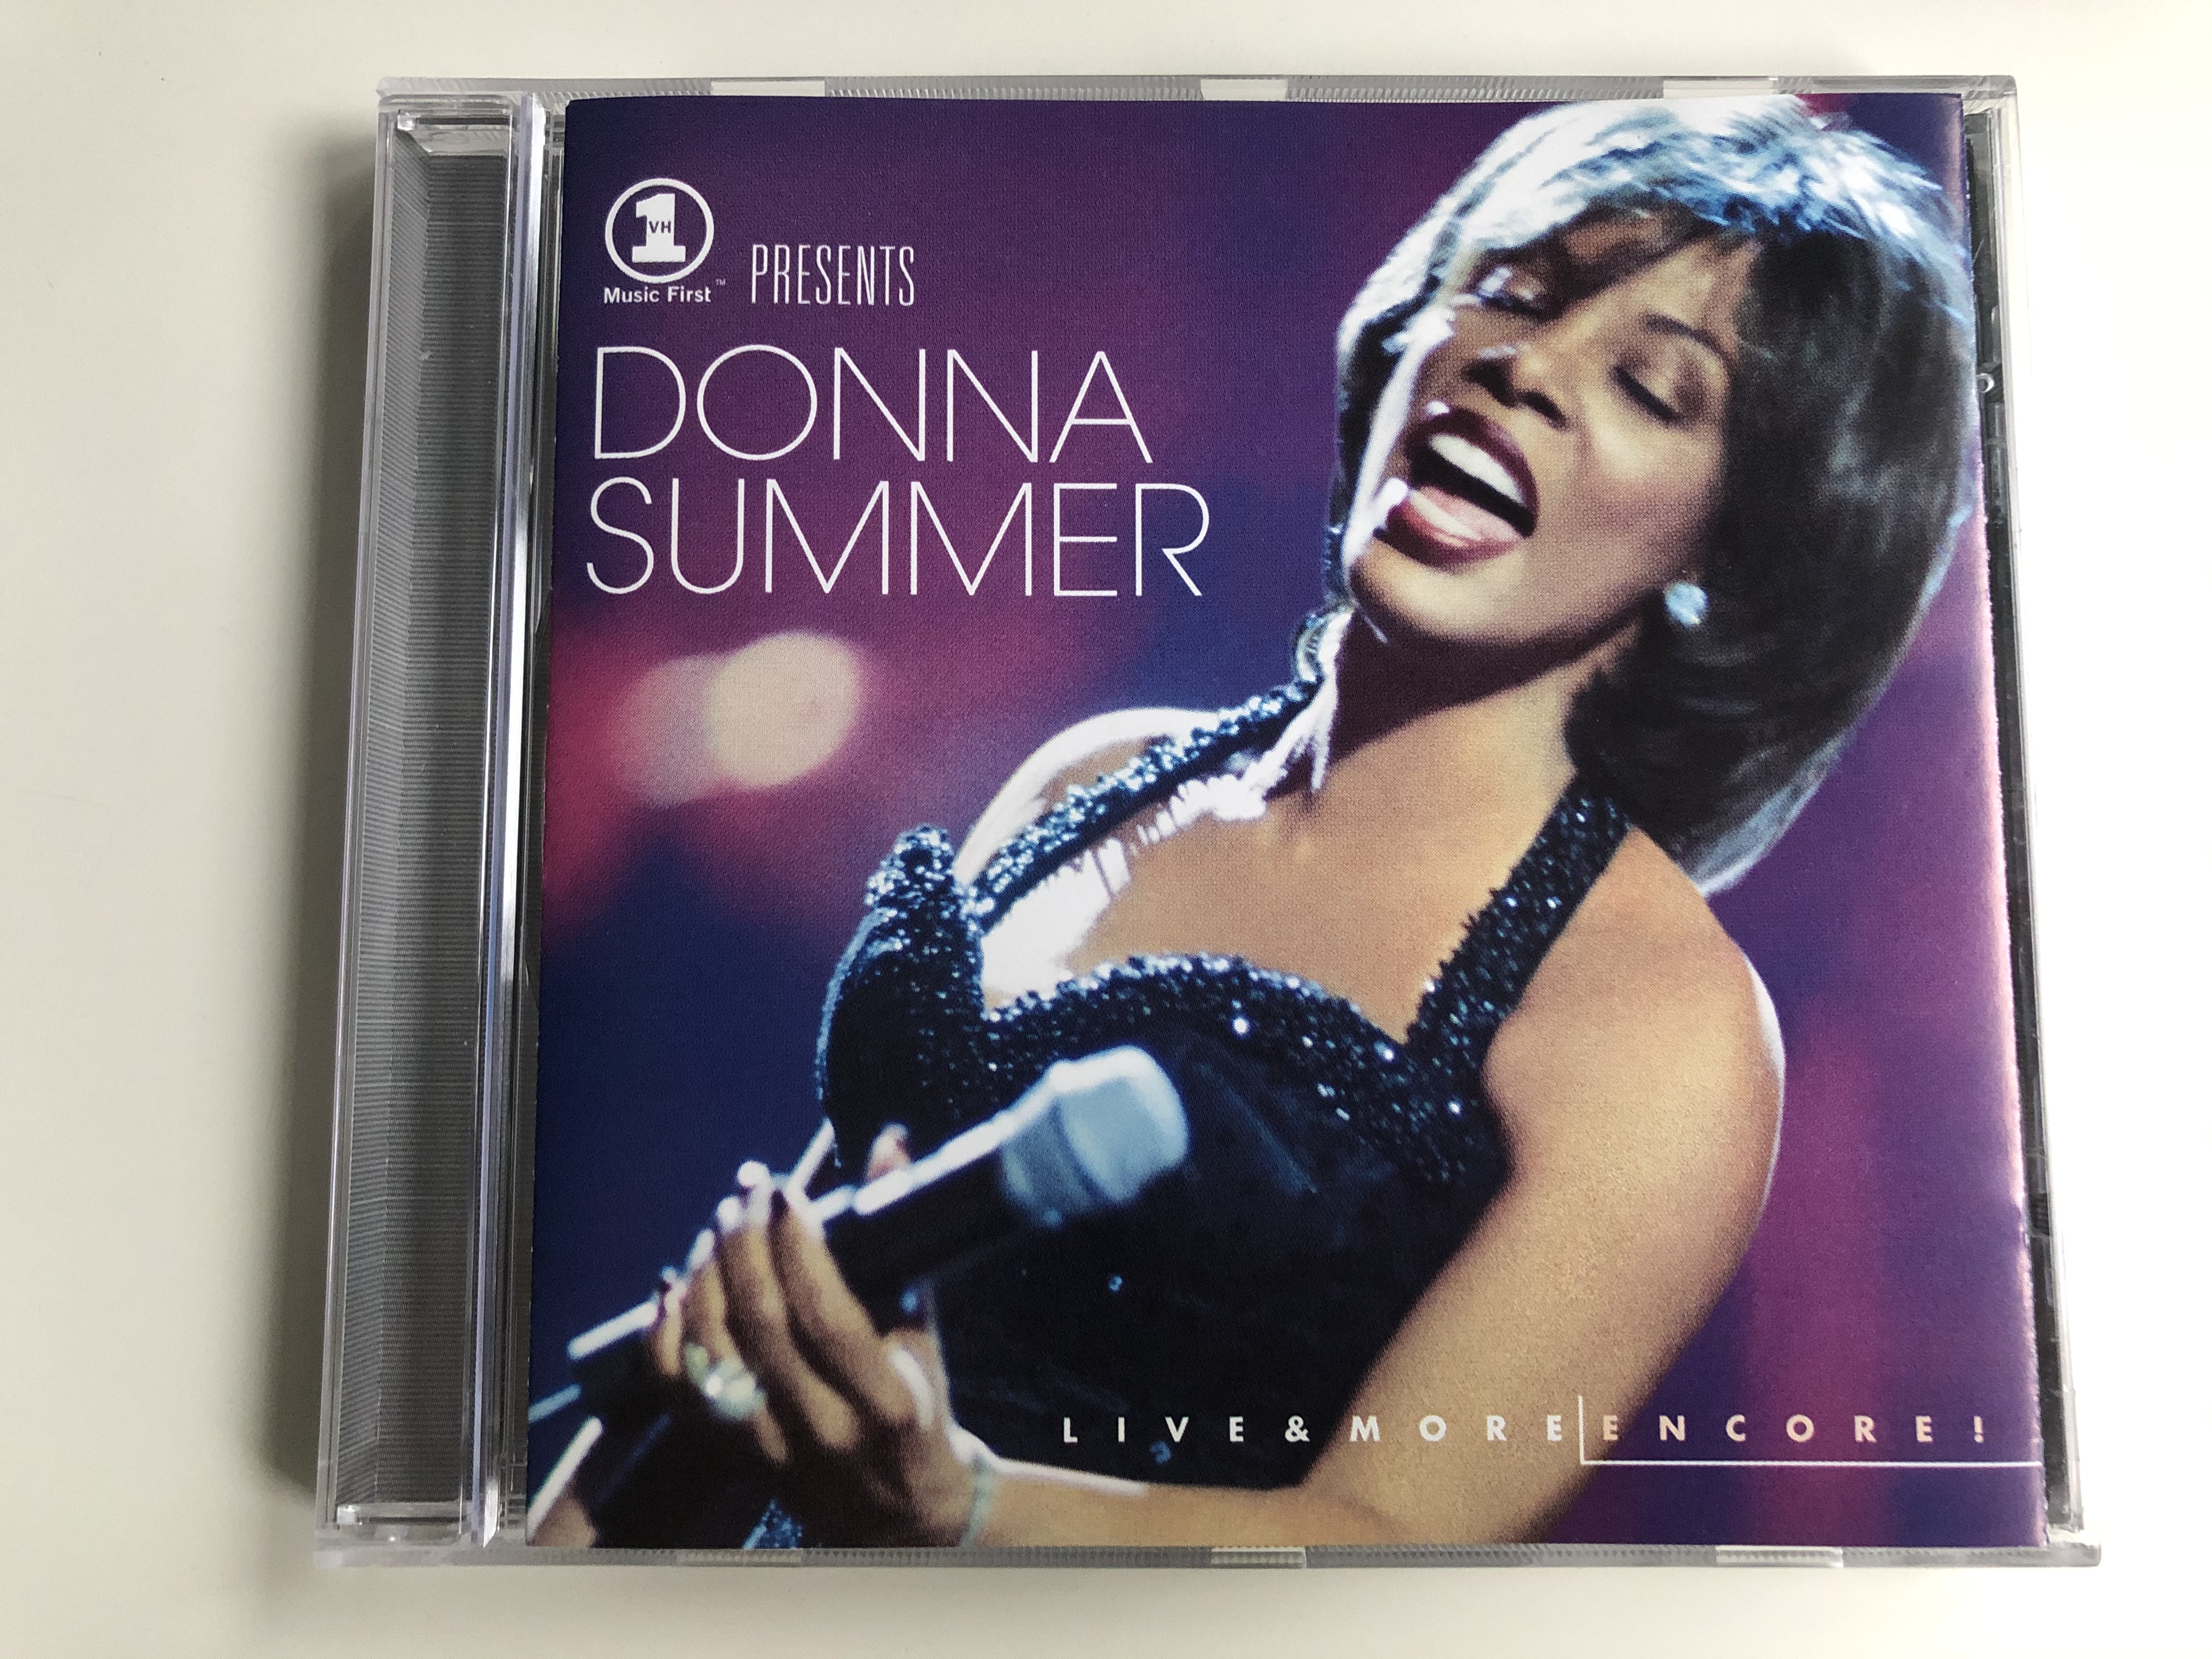 VH1 Presents Live & More Encore! - Donna Summer ‎/ Epic ‎Audio CD 1999 /  EPC 494532 2